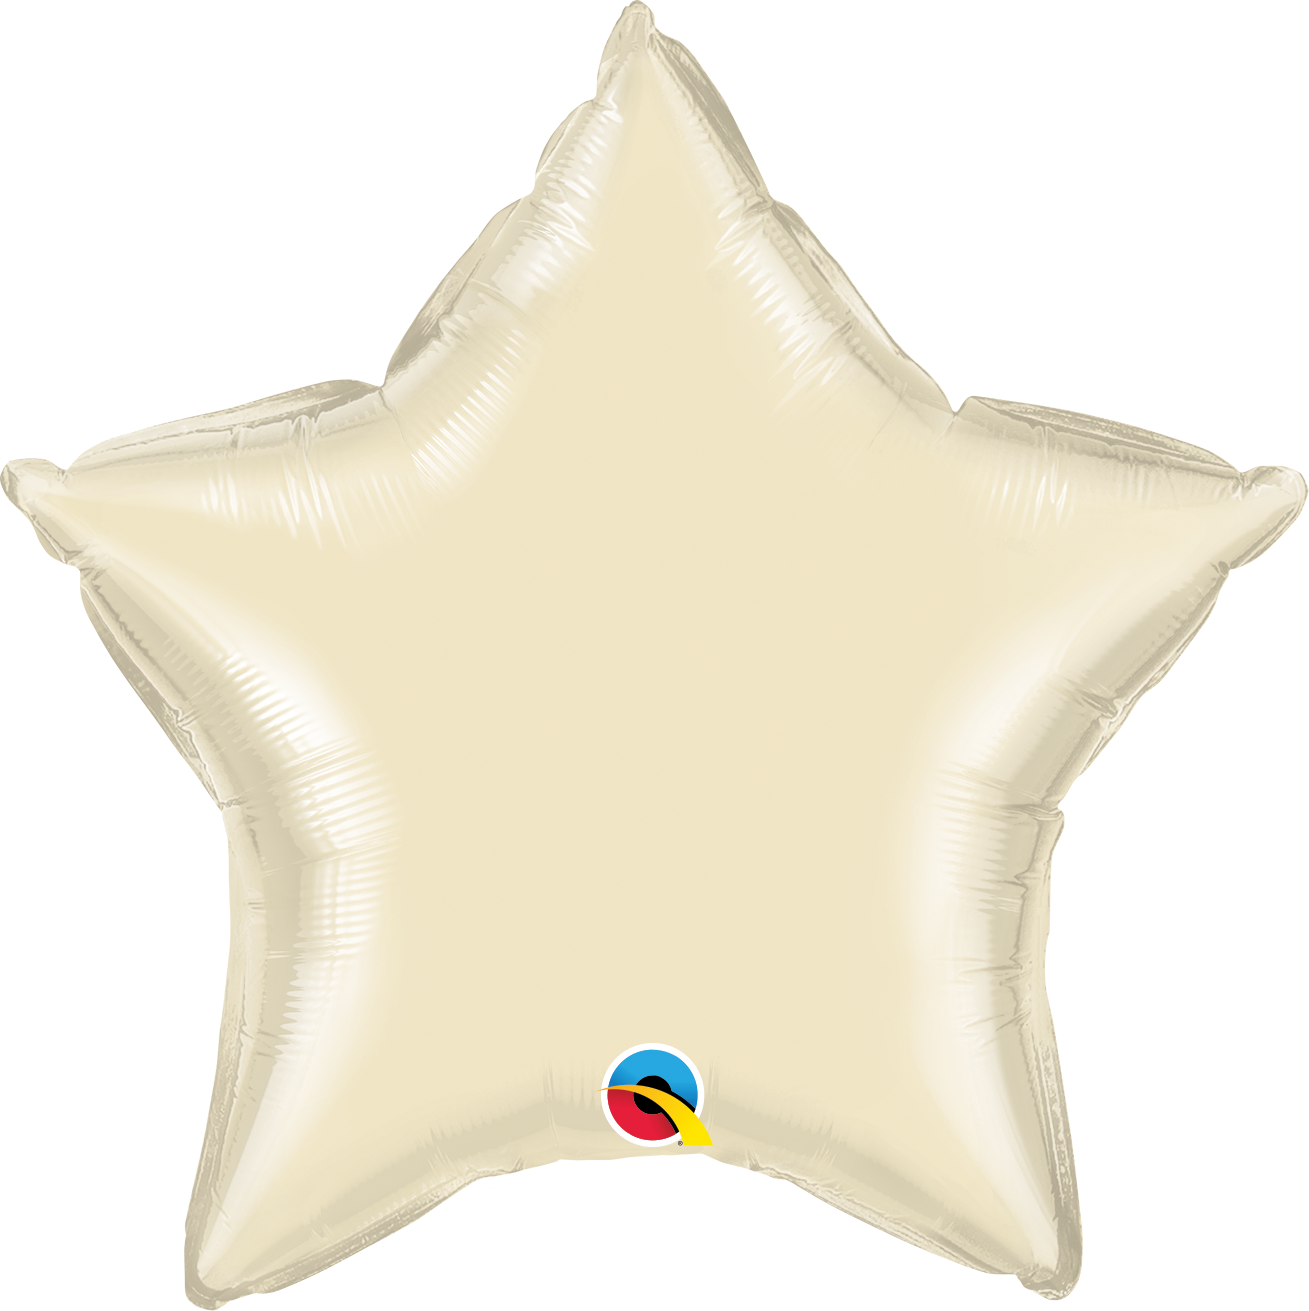 Pearl Ivory Star